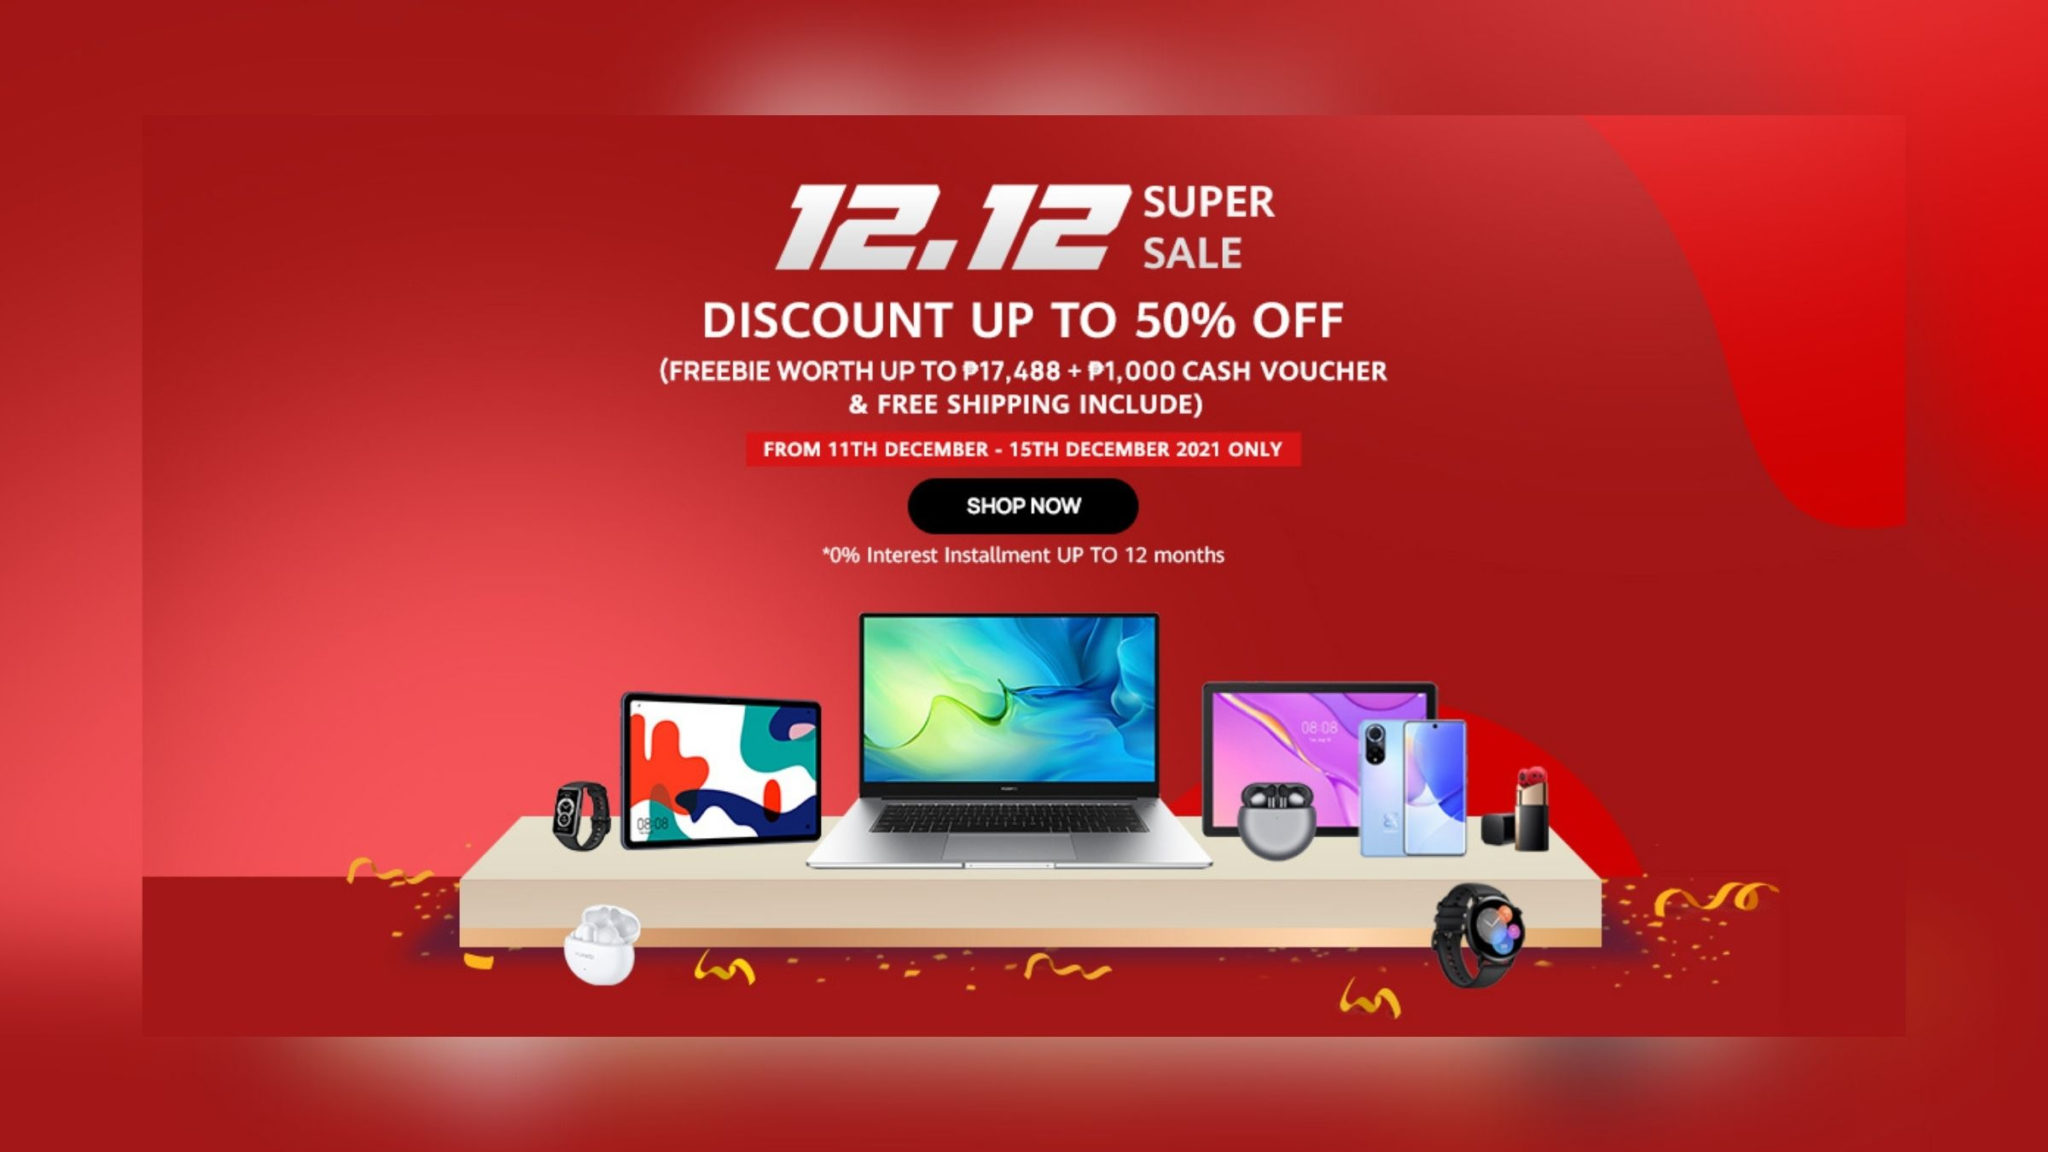 HUAWEI 12.12 Super Sale Header